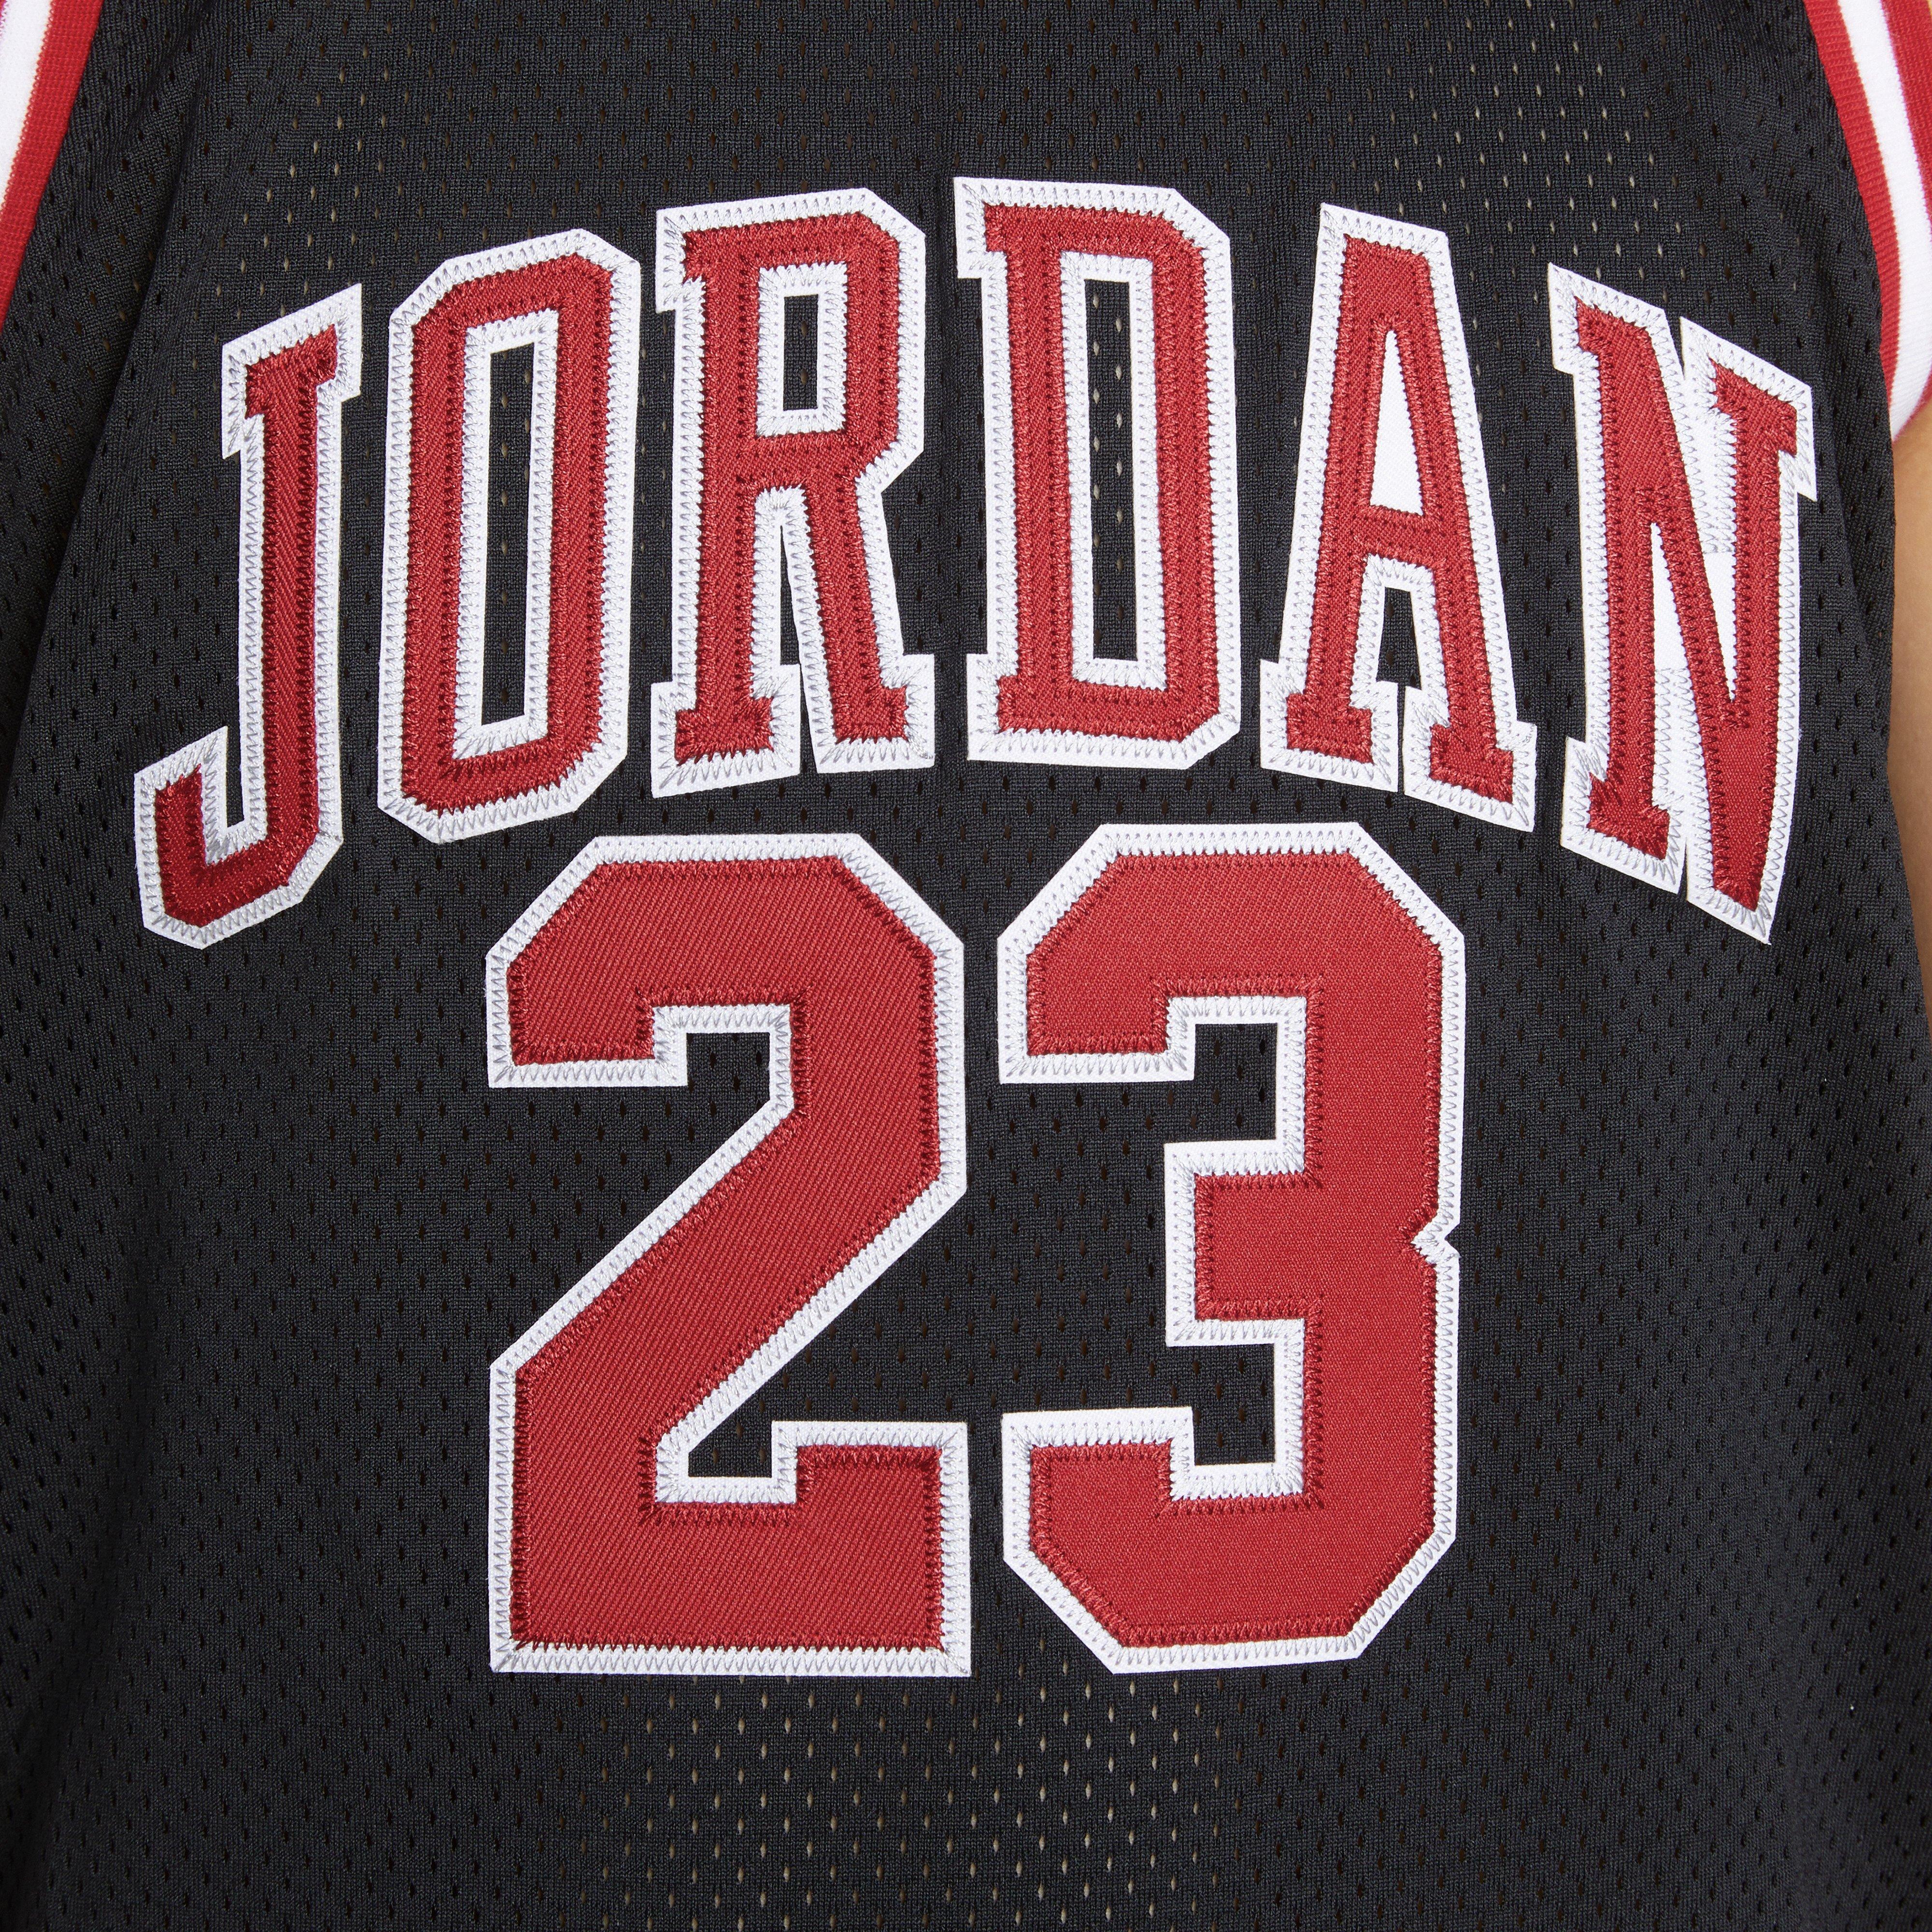 Jordan Kids' 23 Jersey, Boys', XL, Black